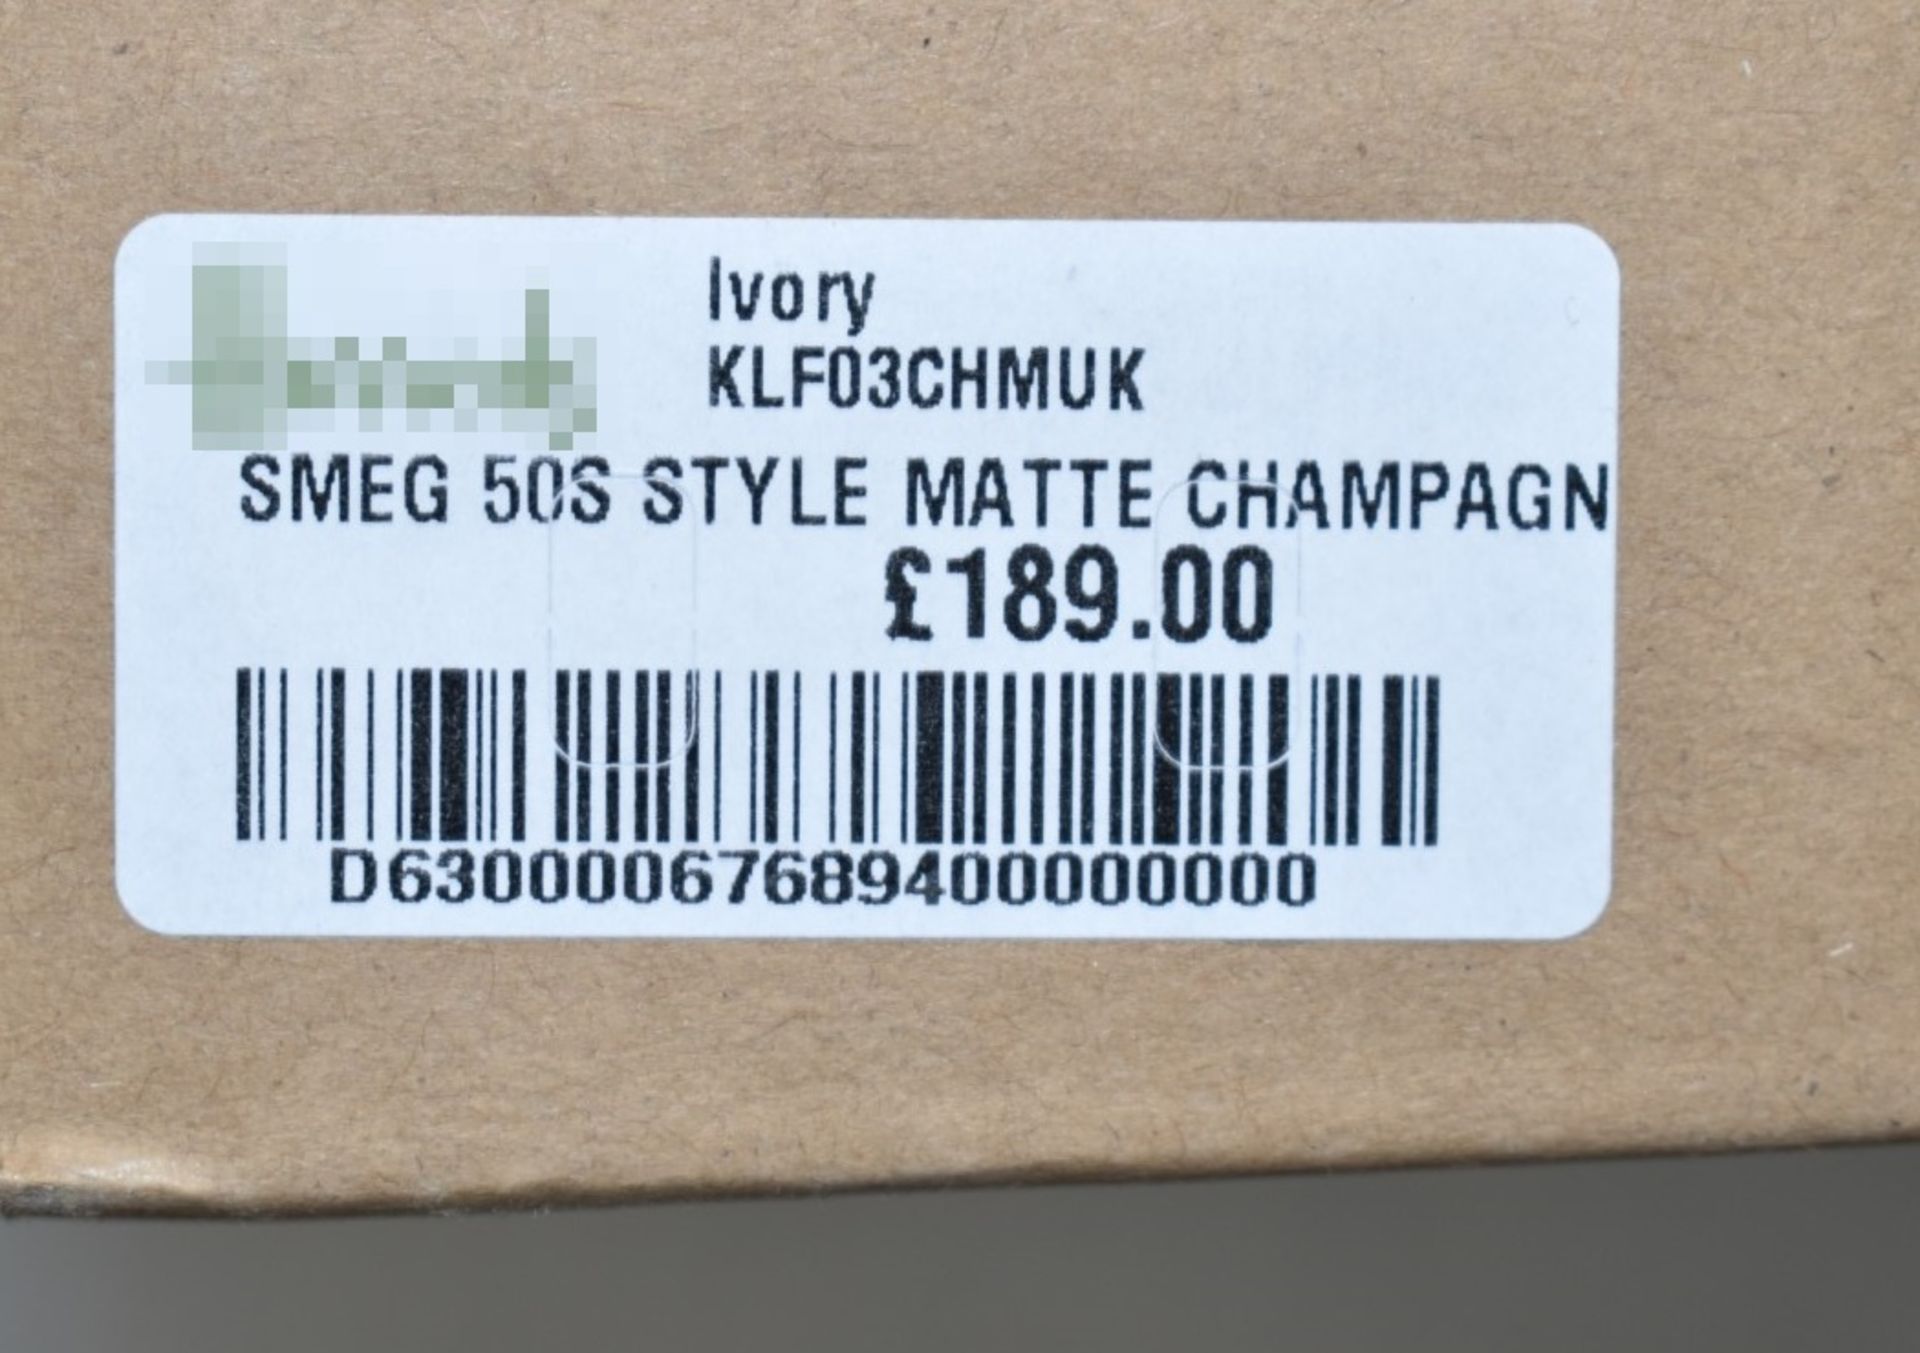 1 x SMEG Retro 50s-Style Electric Kettle In A Matte Champagne Finish - Original Price £189.00 - Image 5 of 12